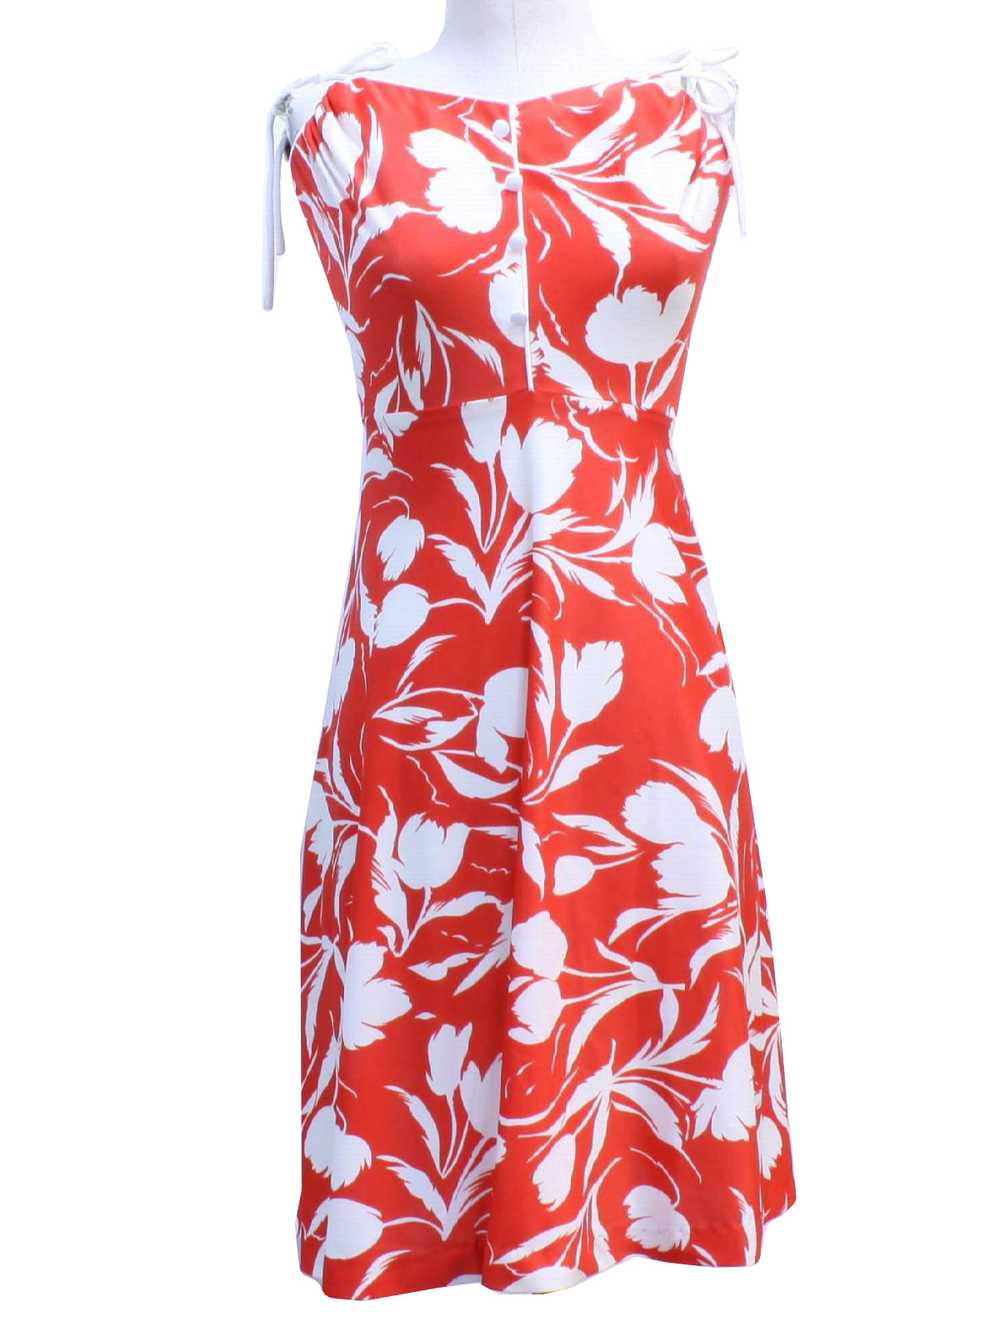 1970's Jack Hartley Knit Sun Dress - image 1